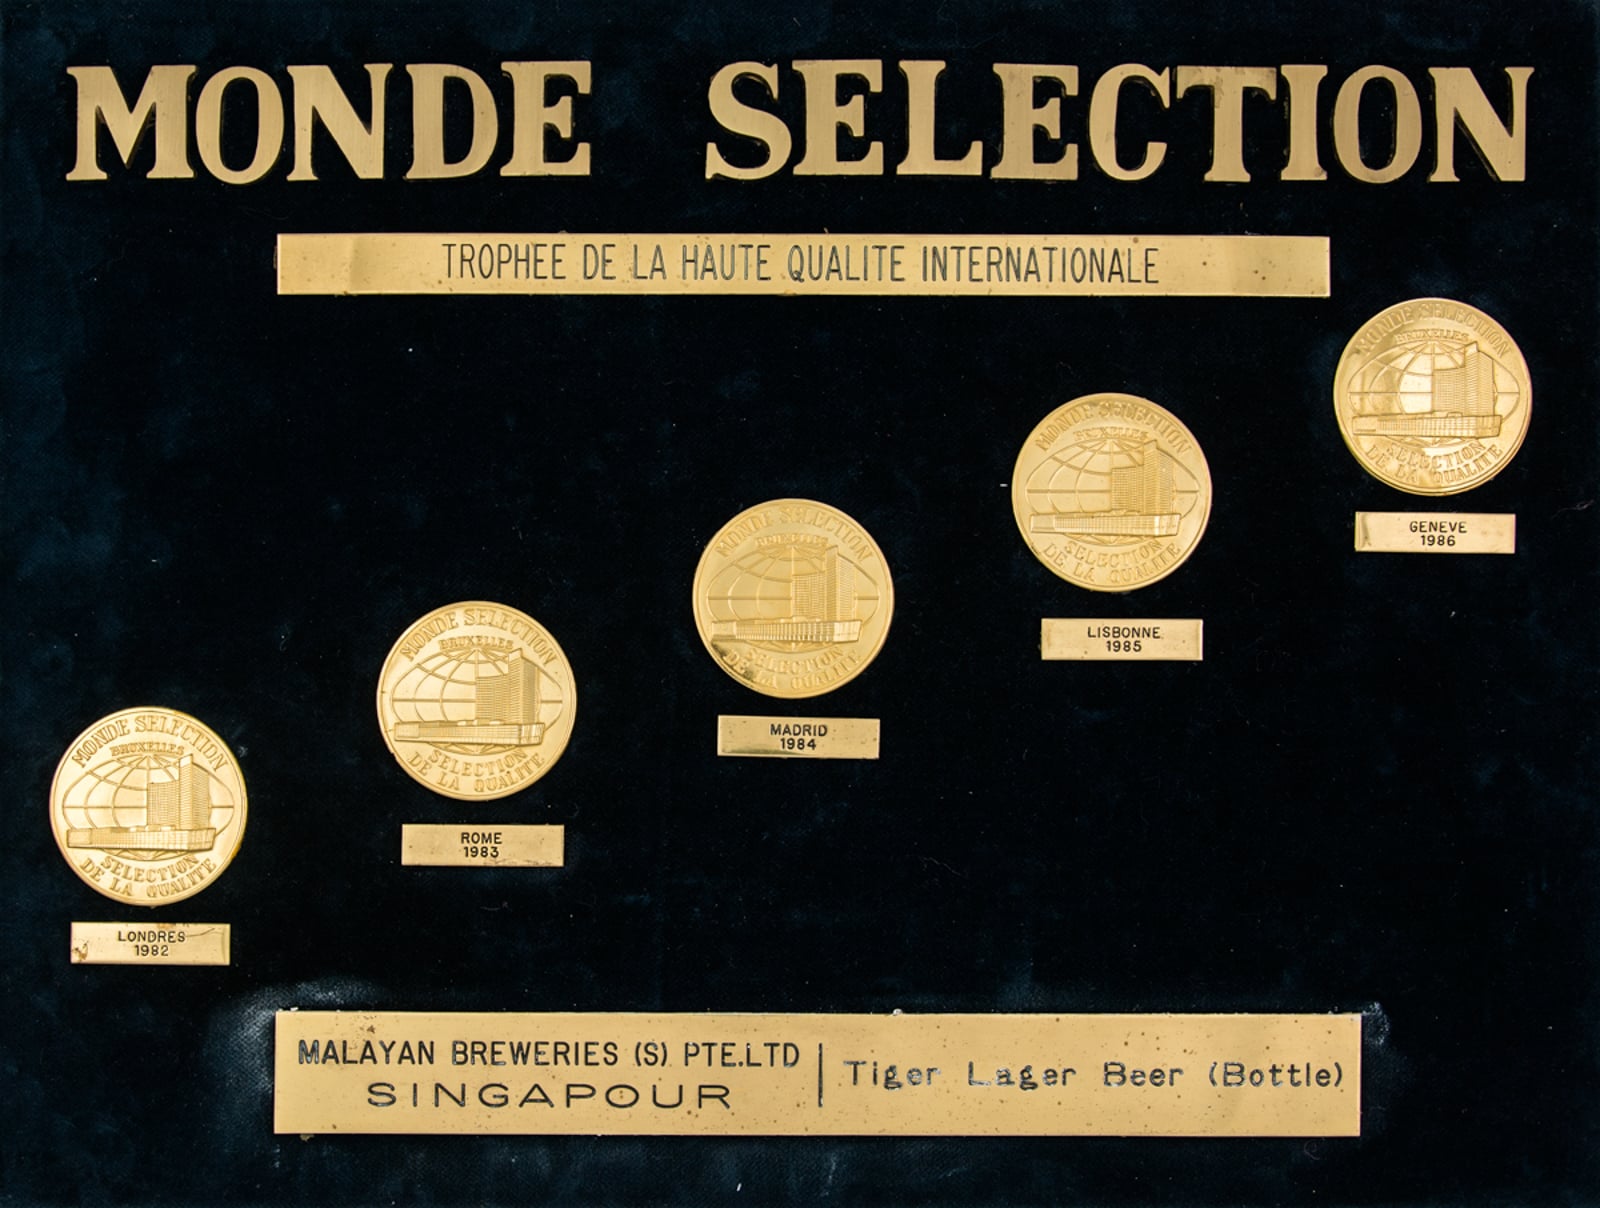 Monde Selection for Tiger Beer